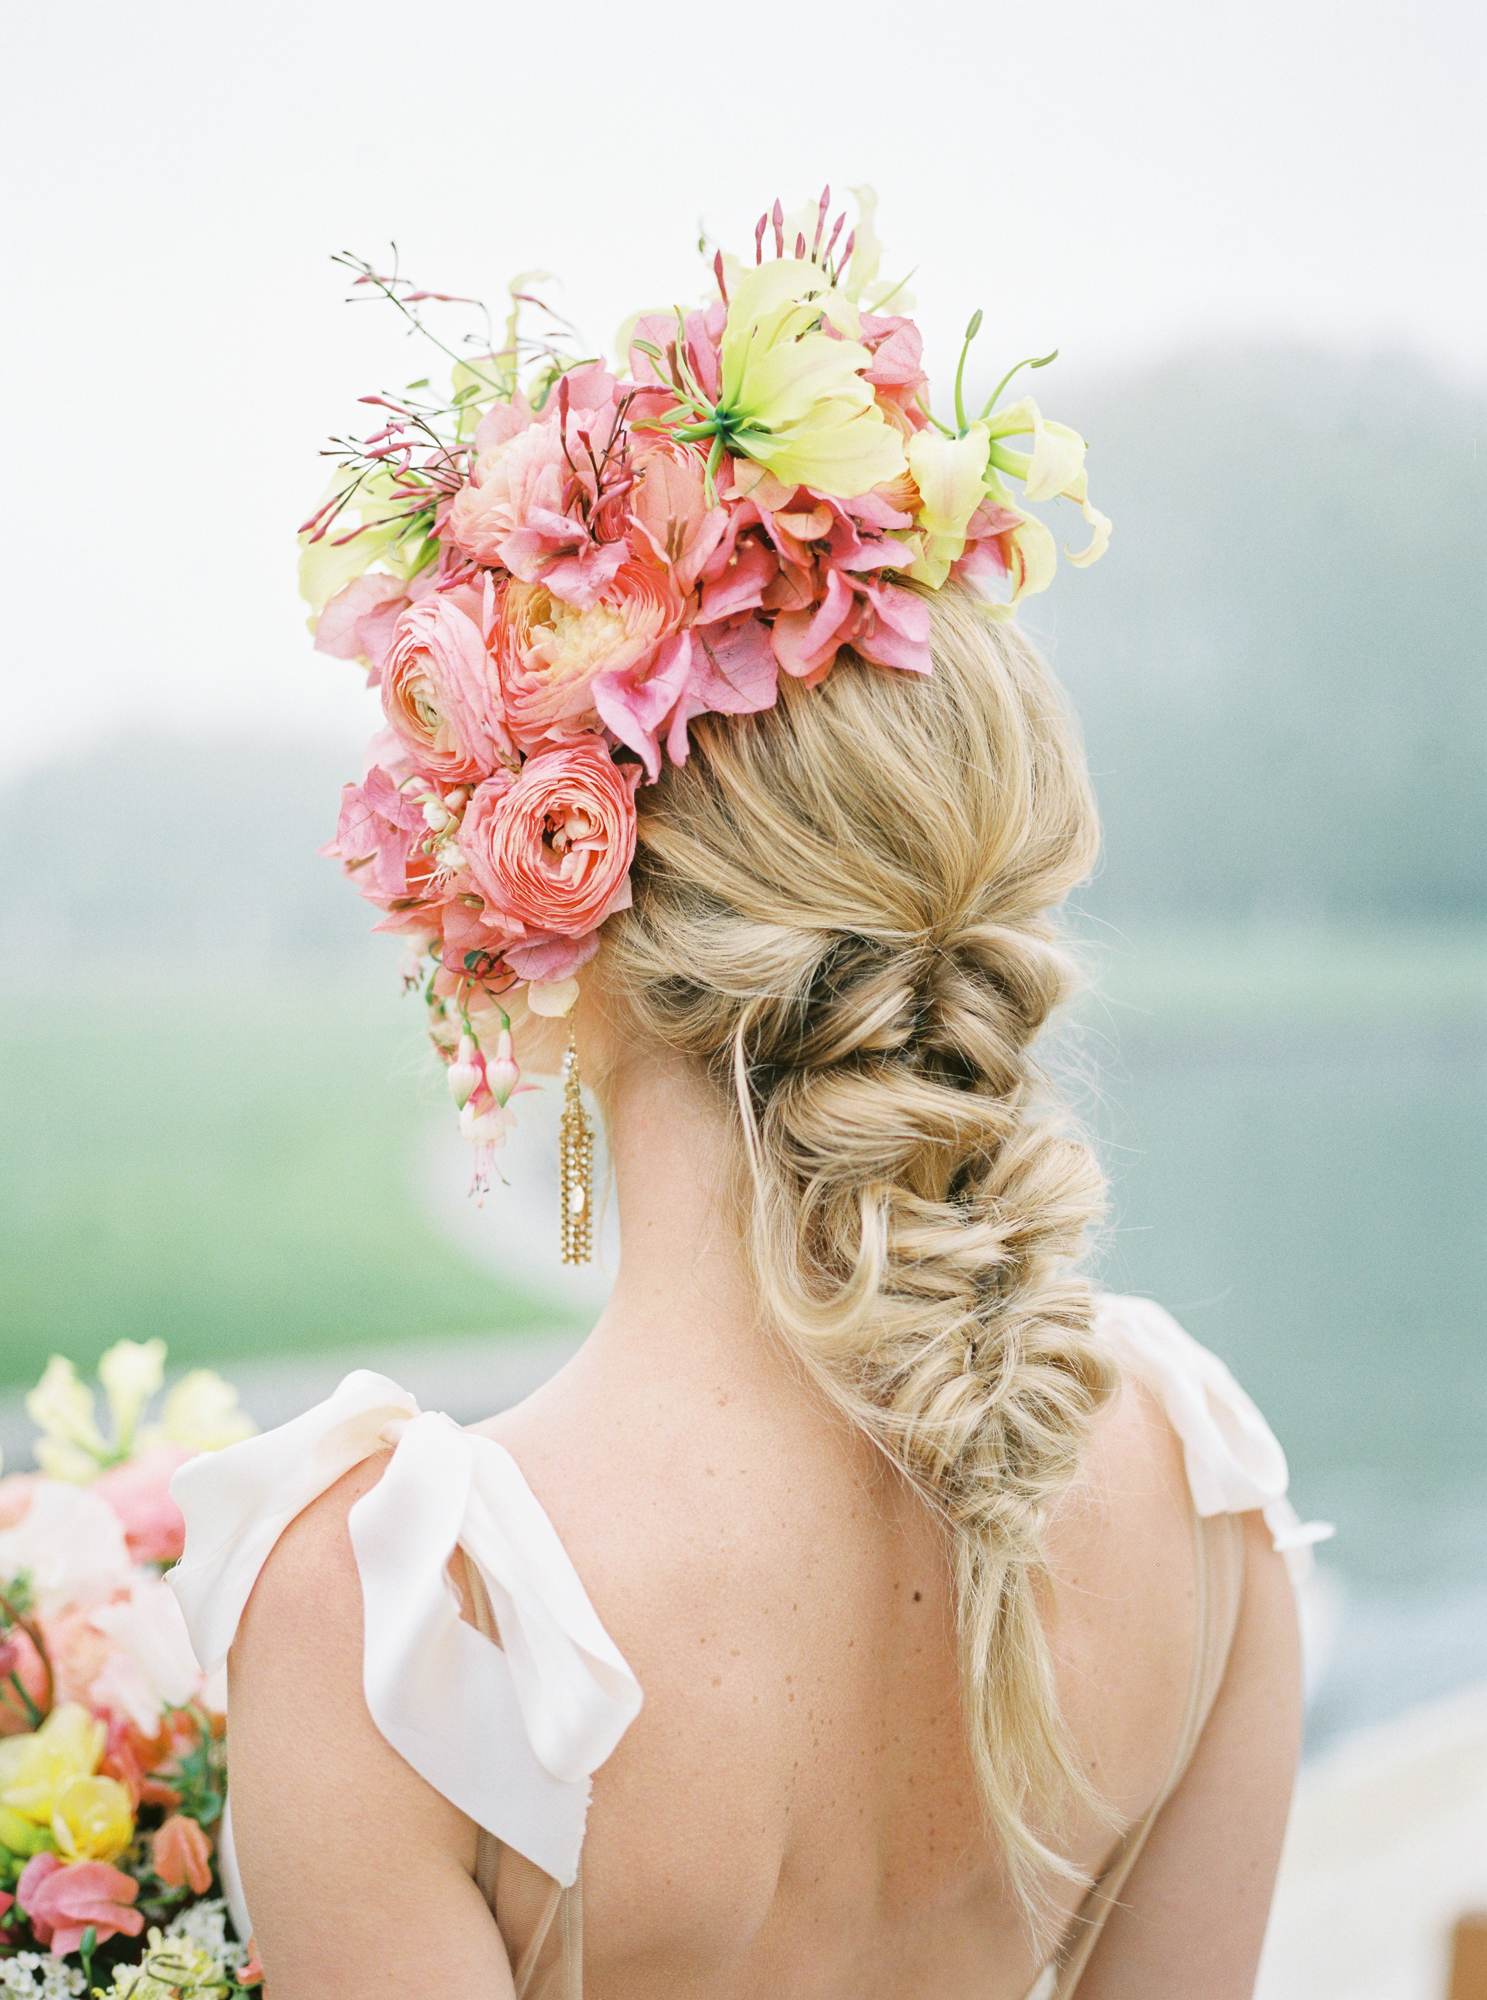 travellur_photoshoot__summer_in_versailles_wedding_flowers_bridal_luxe_shoot_floral_france_isibeal_studio_hair_trine_juel.jpg